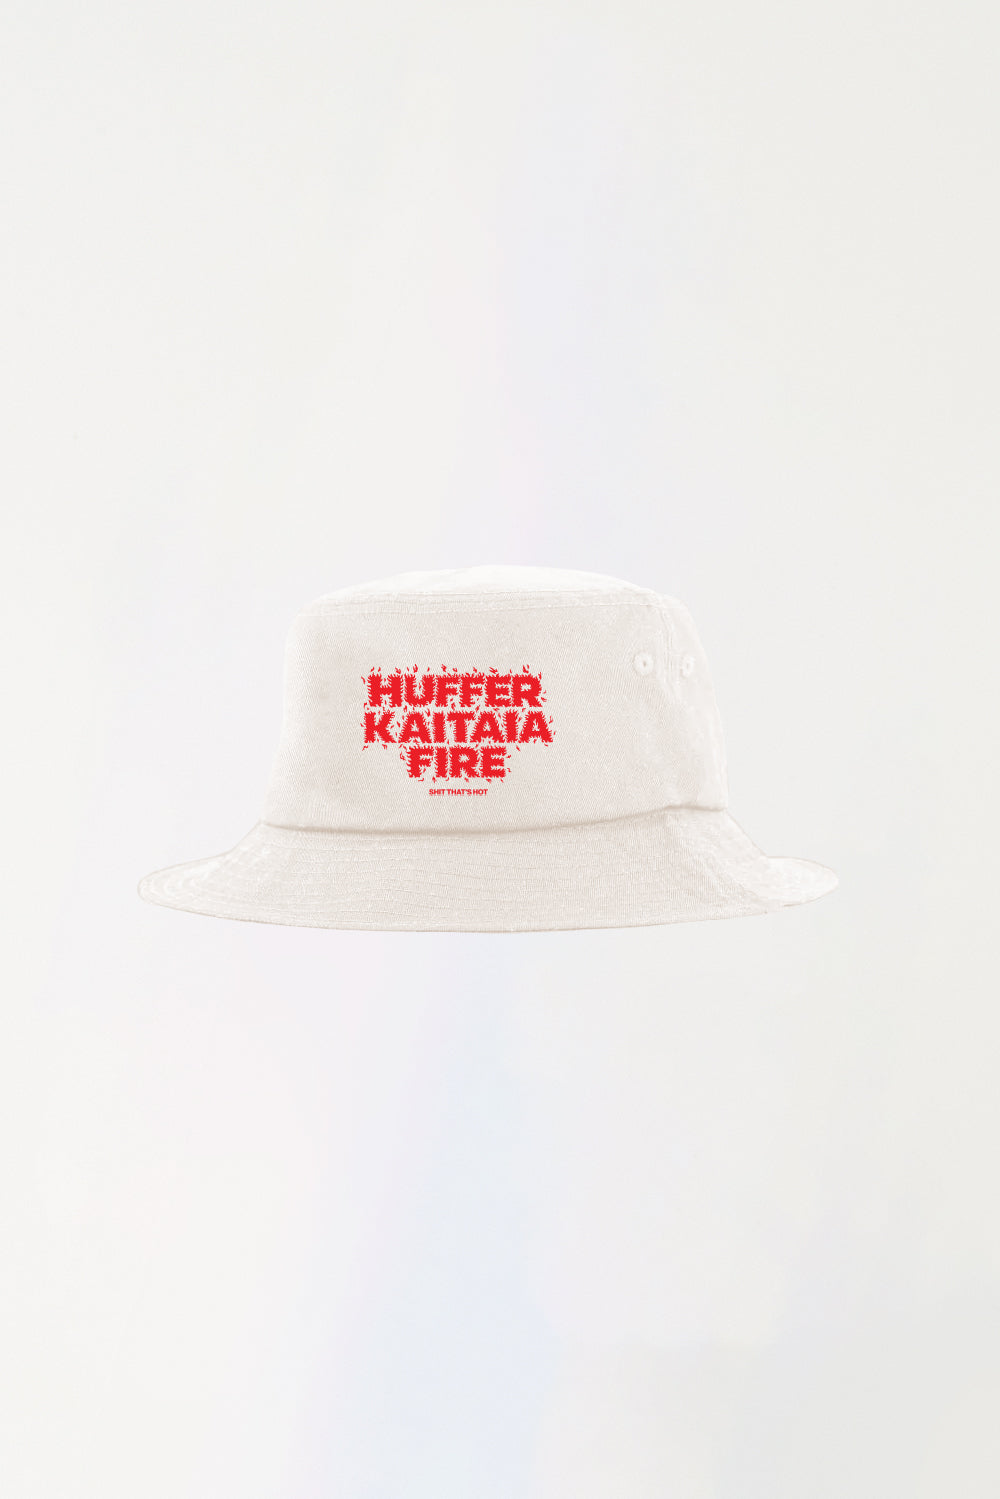 Huffer x Kaitaia Fire - BUCKET HAT - ON FIRE (CHALK)